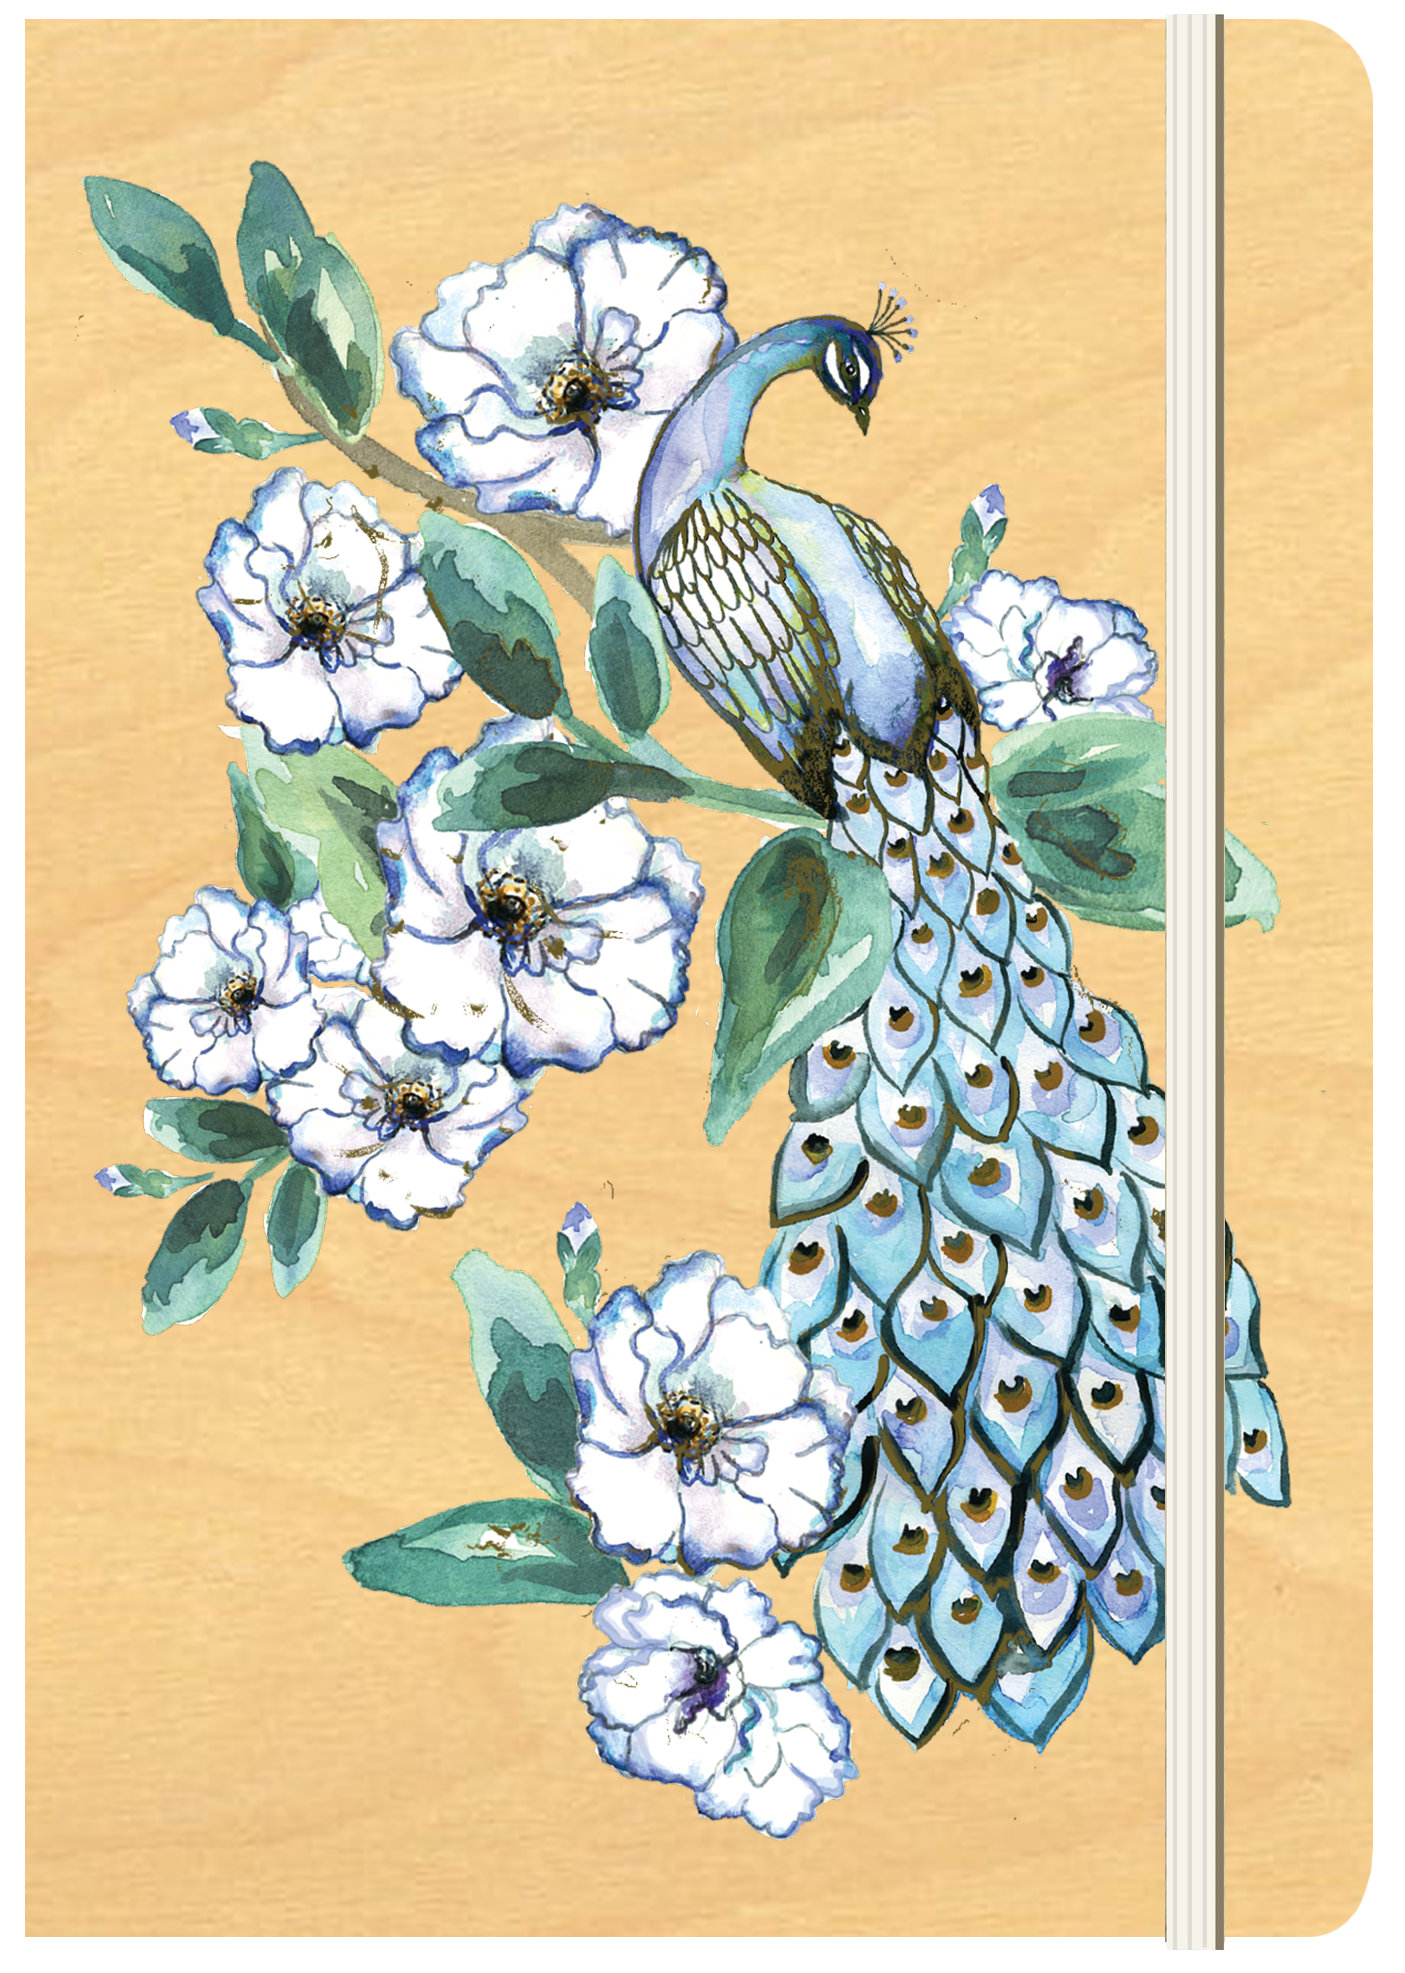 A5 Wood Cover Journal (Blank) - Peacock Garden